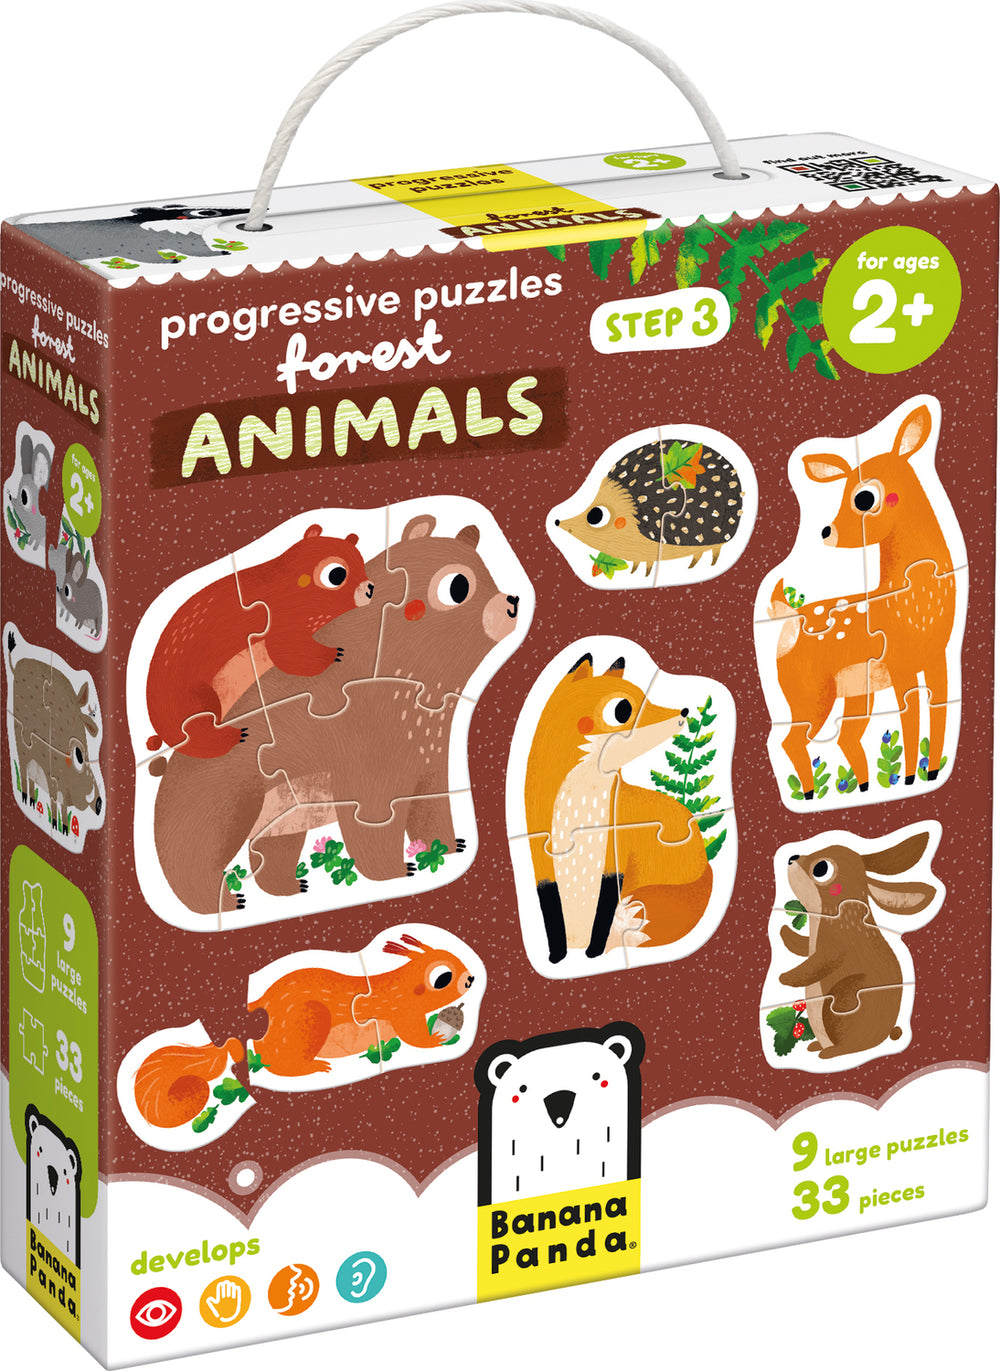 Progressive Puzzles Forest Animals